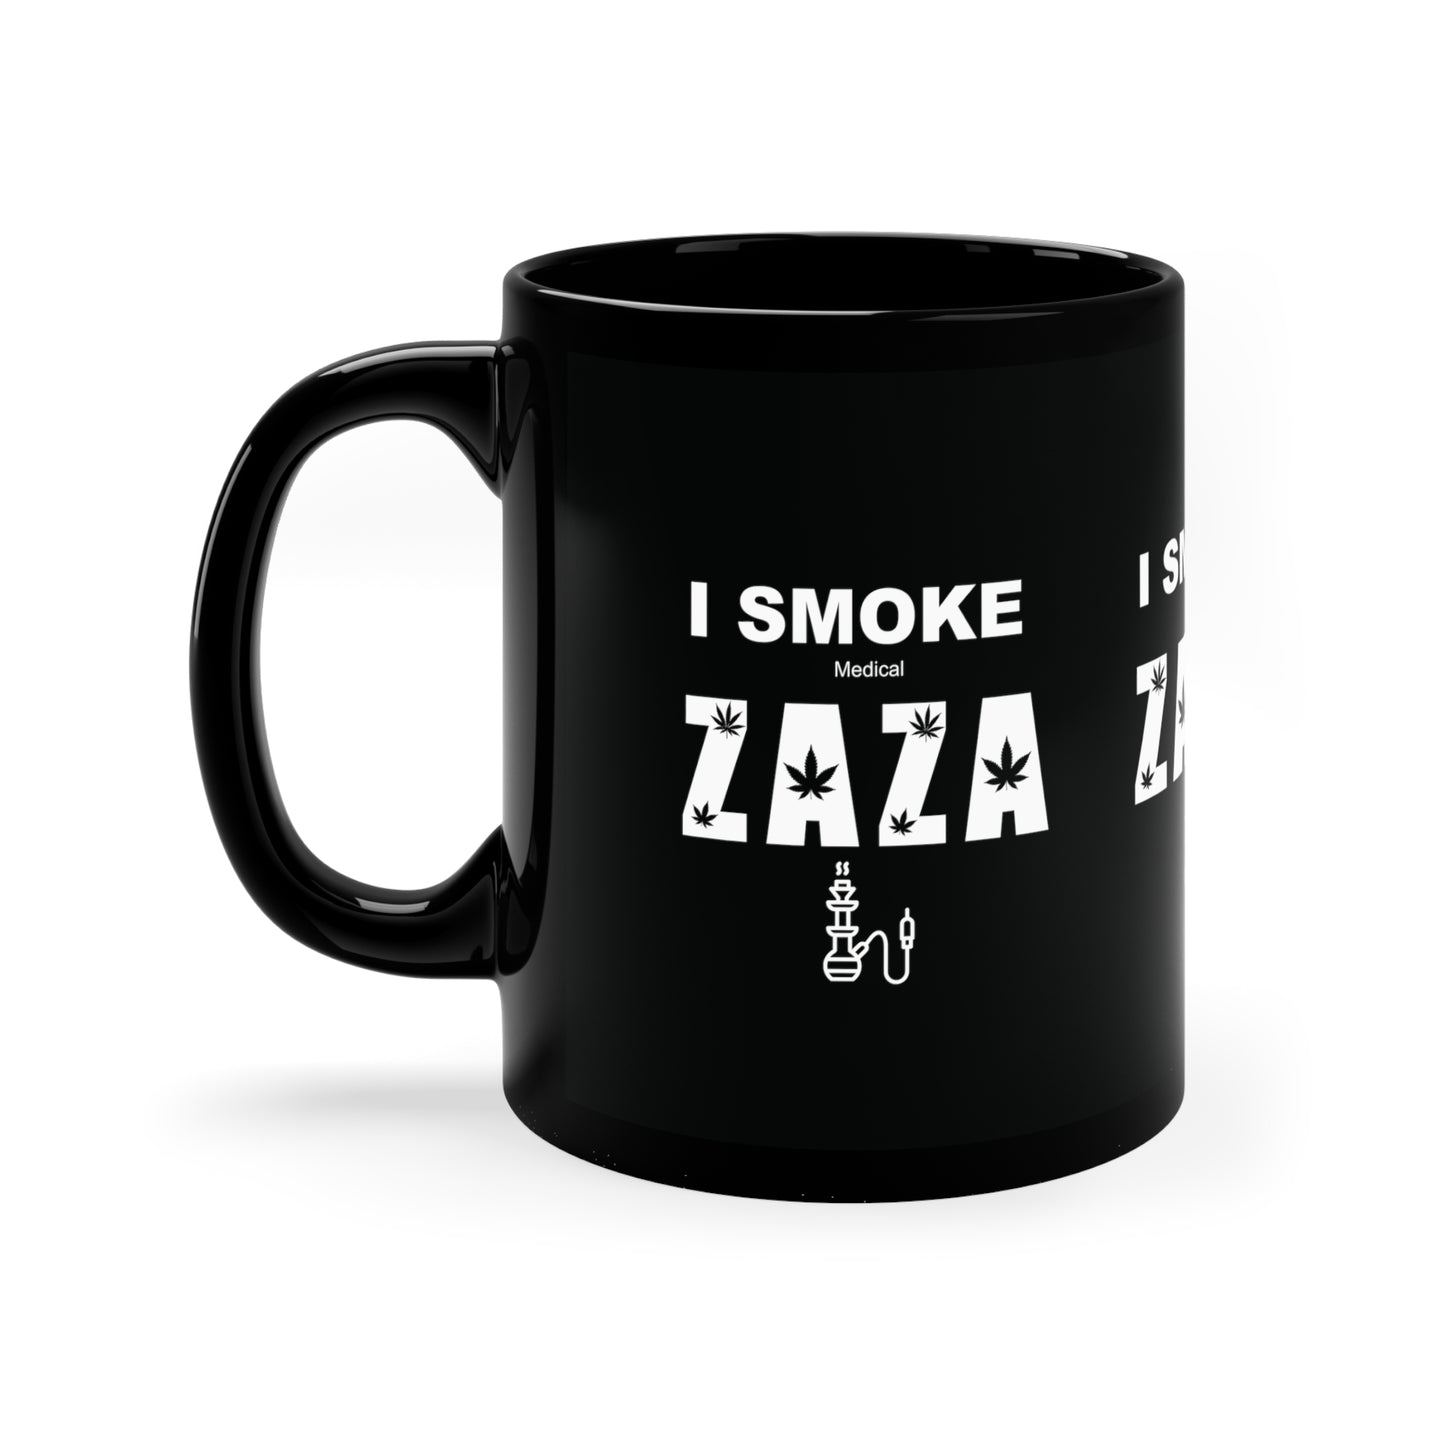 I Smoke Medical ZAZA 11oz Black- Coffee Tea Mug